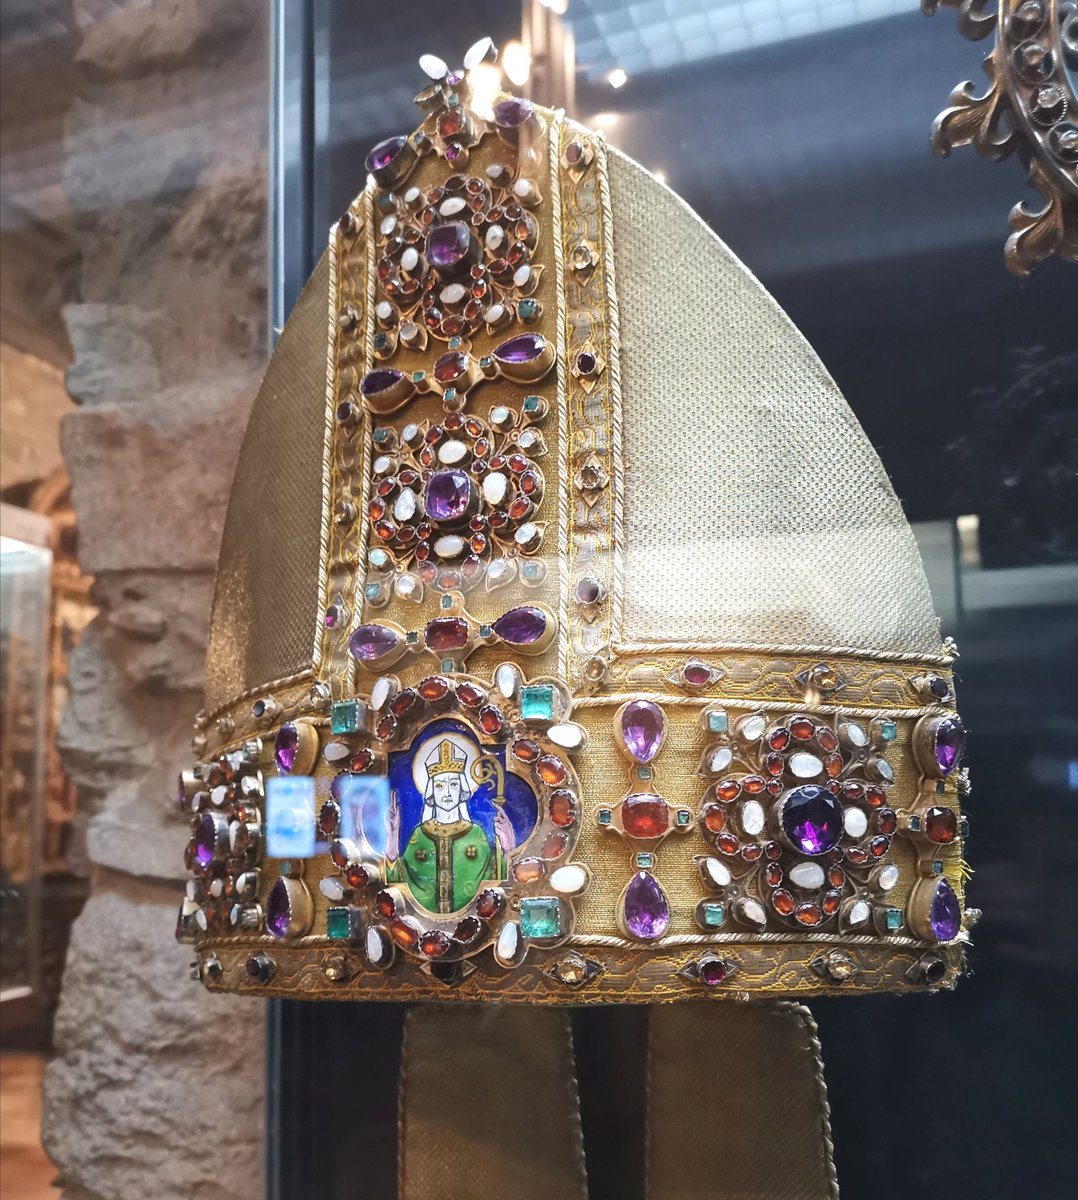 Hiroko Miyamoto Ar Twitter カラフルな宝石が使われている司祭帽子 その横には司祭杖 中心の 十字架にはピンクの綺麗な石が使われています 豪華すぎて手袋でないと触る事が出来ないのですね 一番右の司祭帽子の刺繍が美しい柄と丁寧に仕上げられています 18